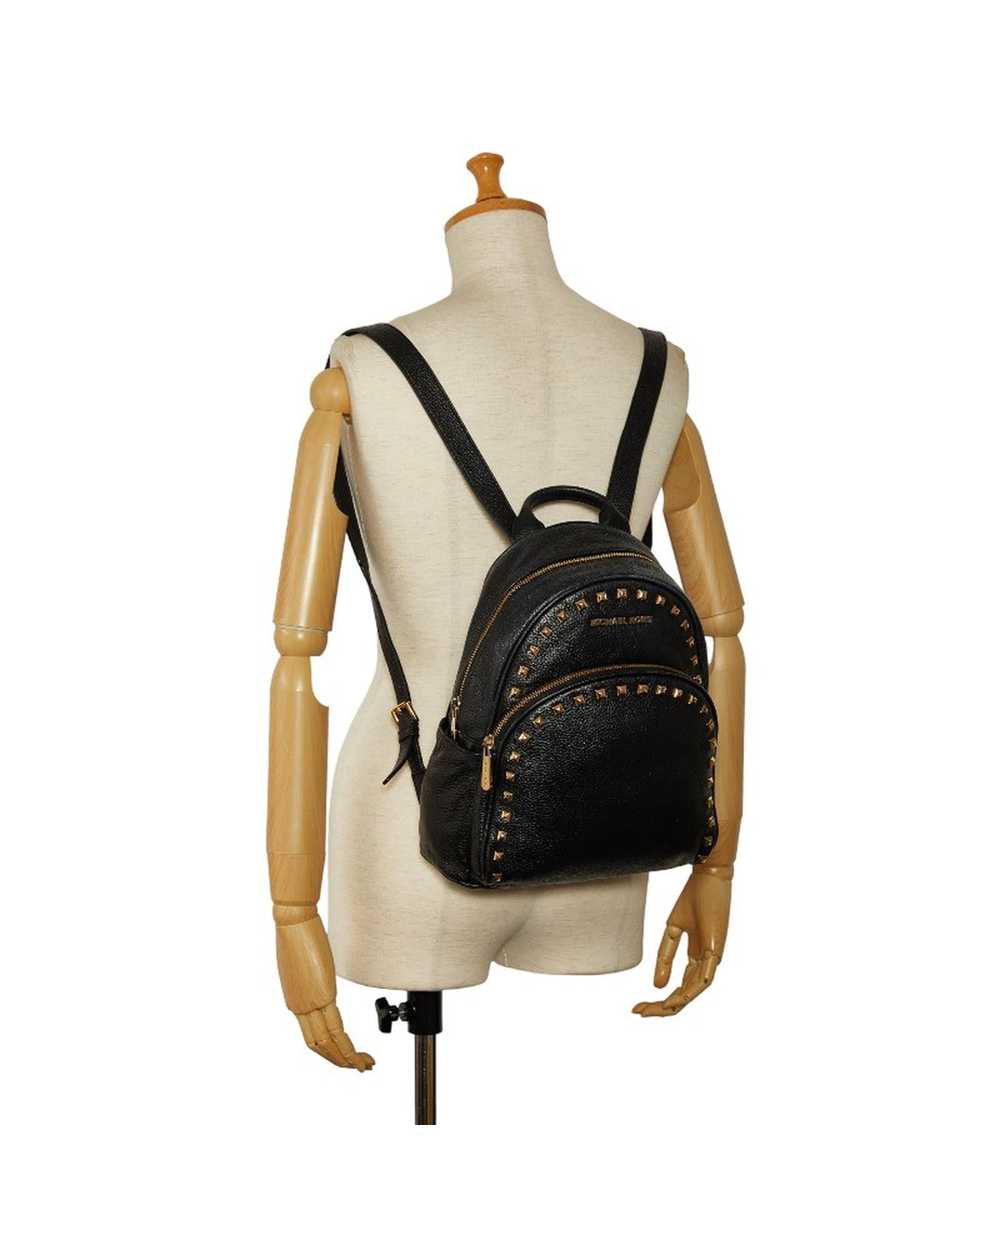 Michael Kors Studded Leather Abbey Backpack Bag - image 9